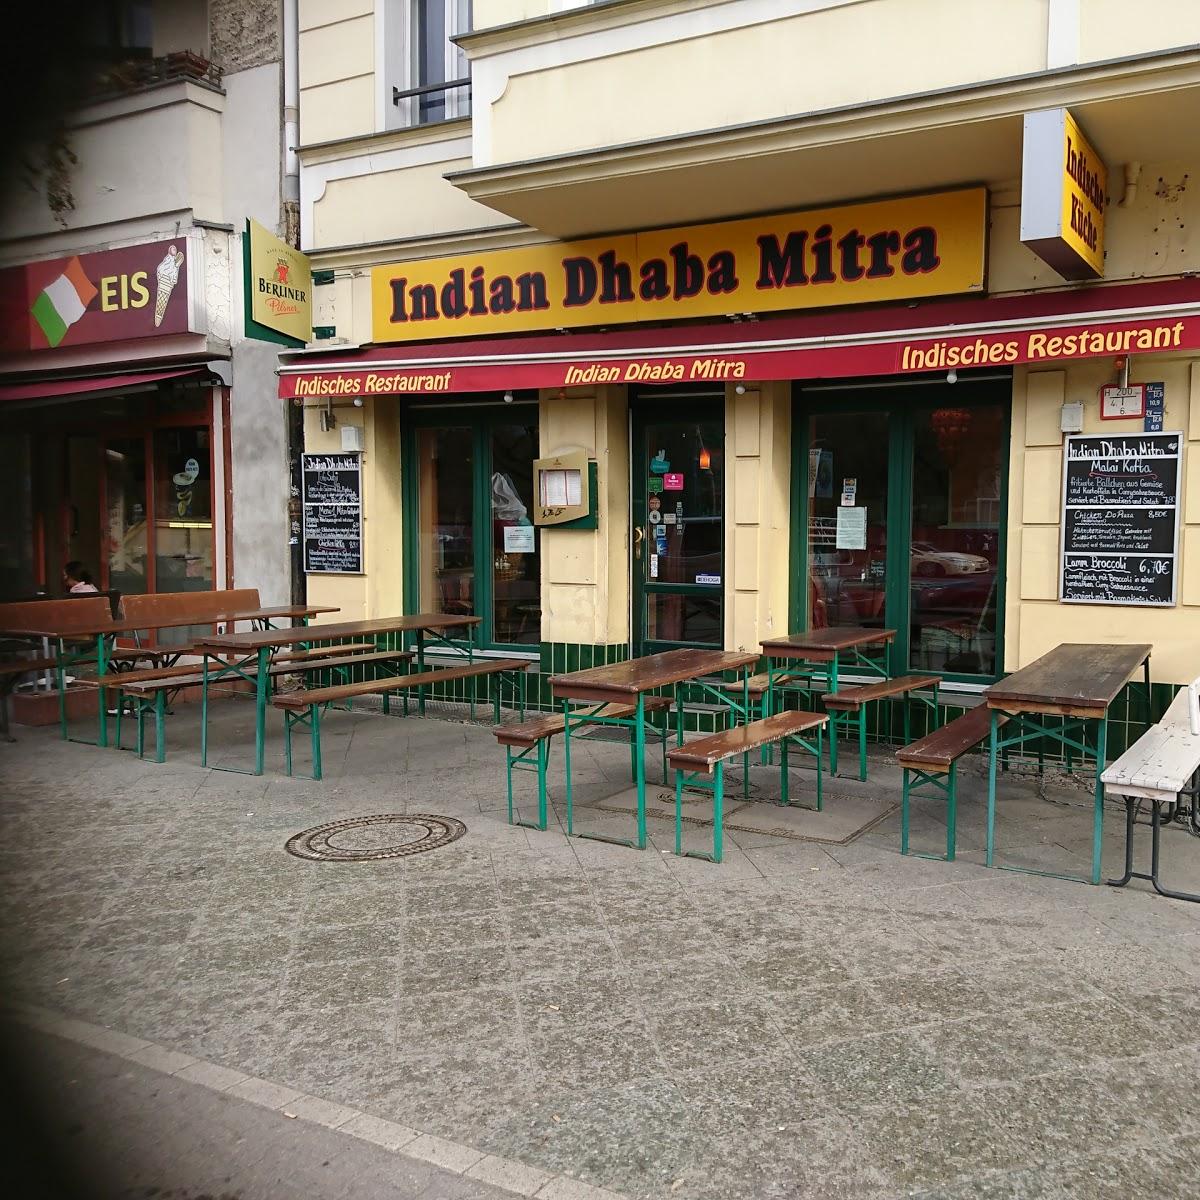 Restaurant "Indian Dhaba Mitra" in Berlin